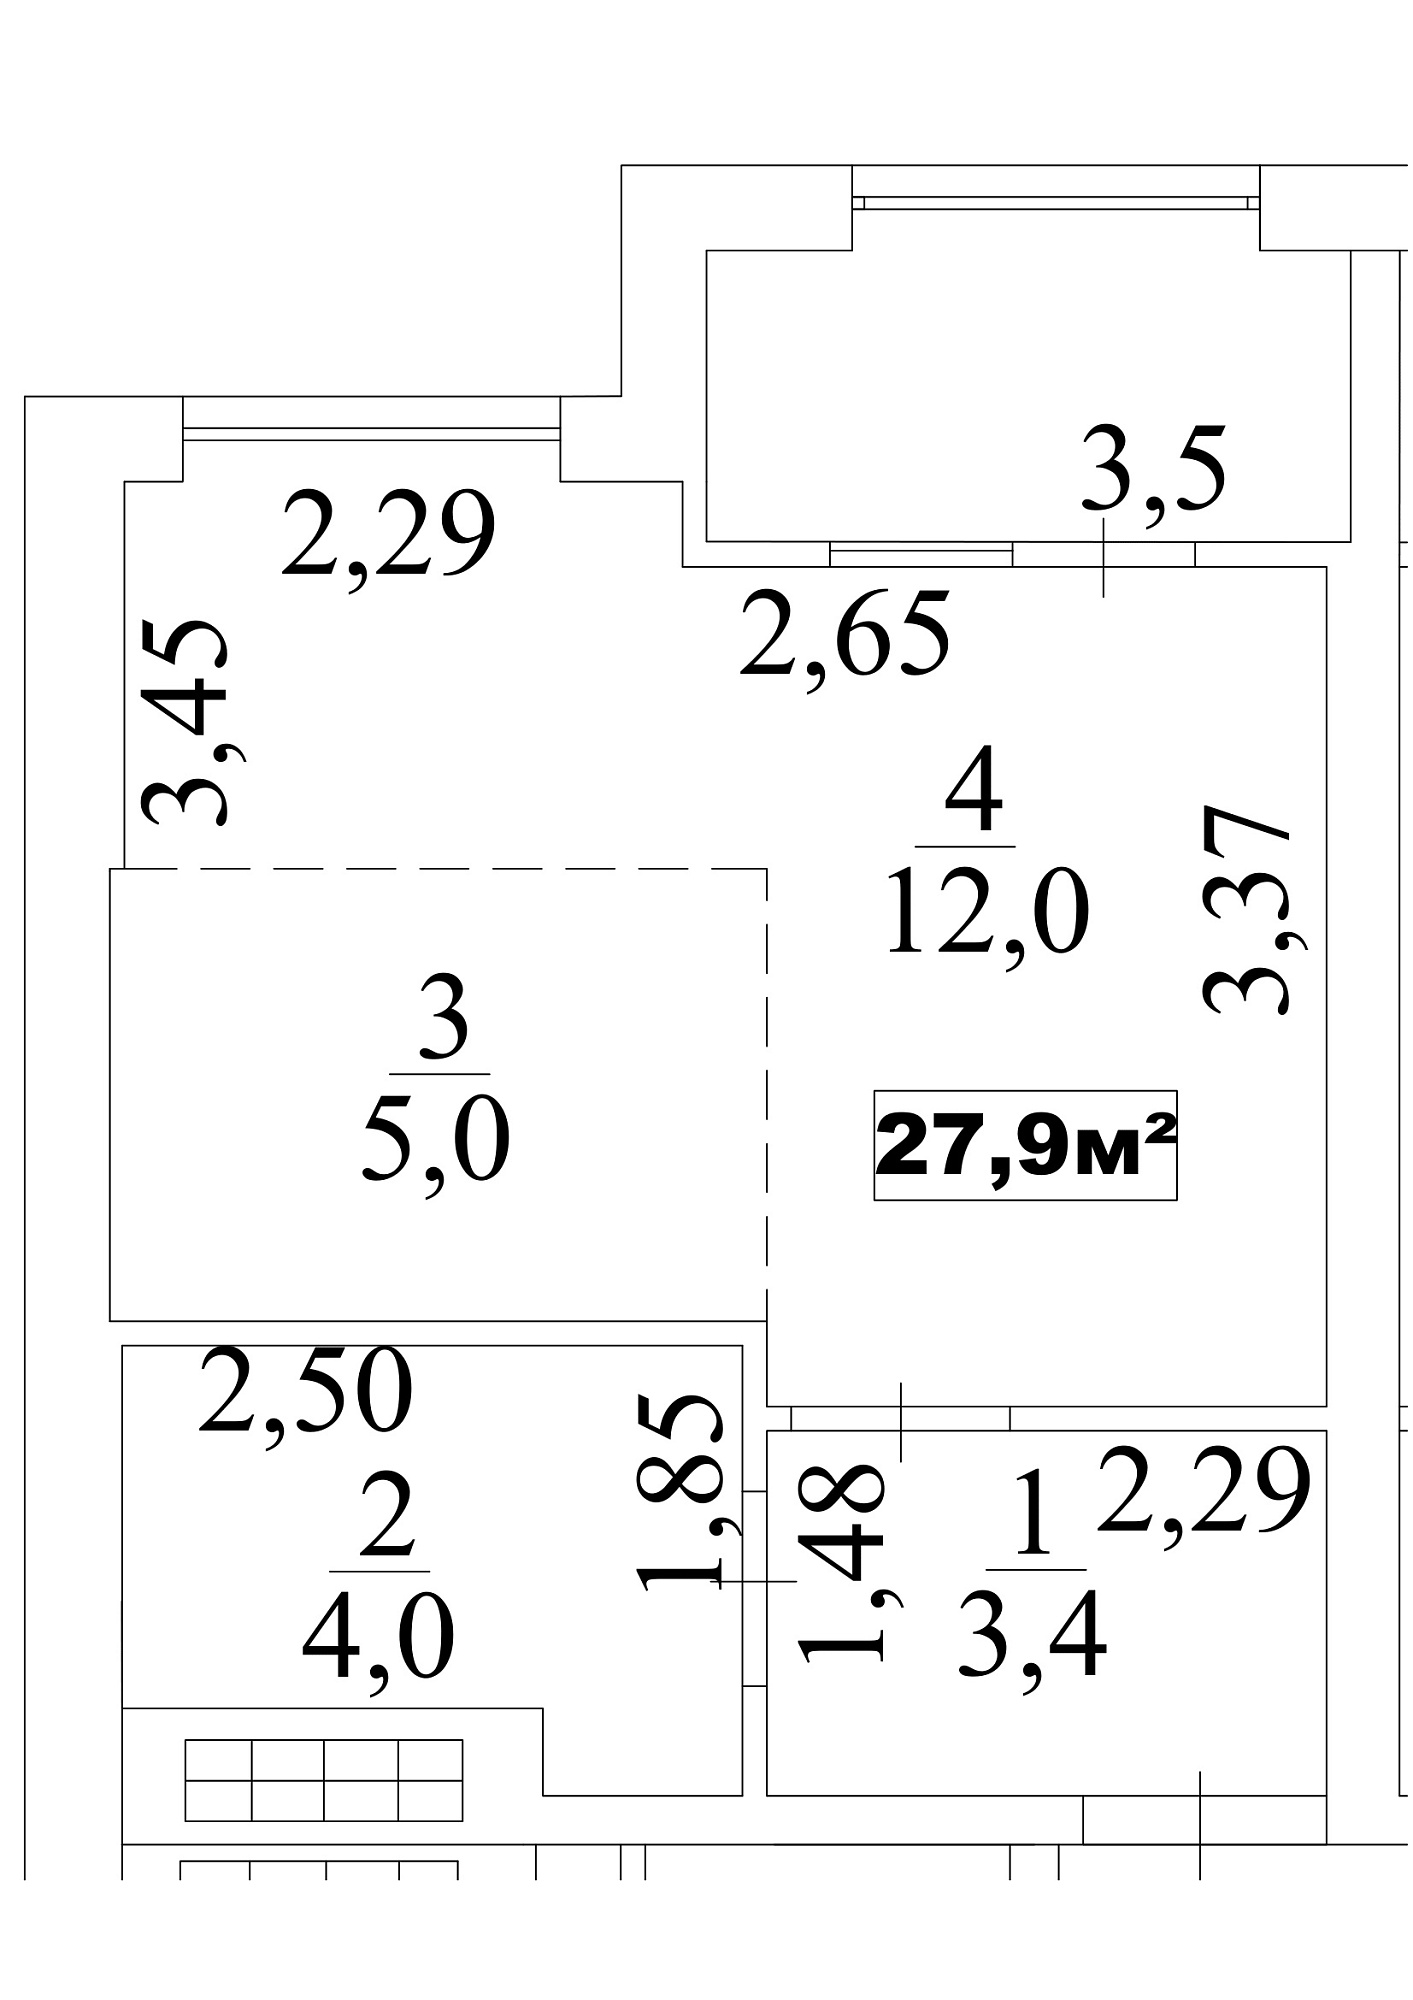 Planning Smart flats area 27.9m2, AB-10-07/0057б.